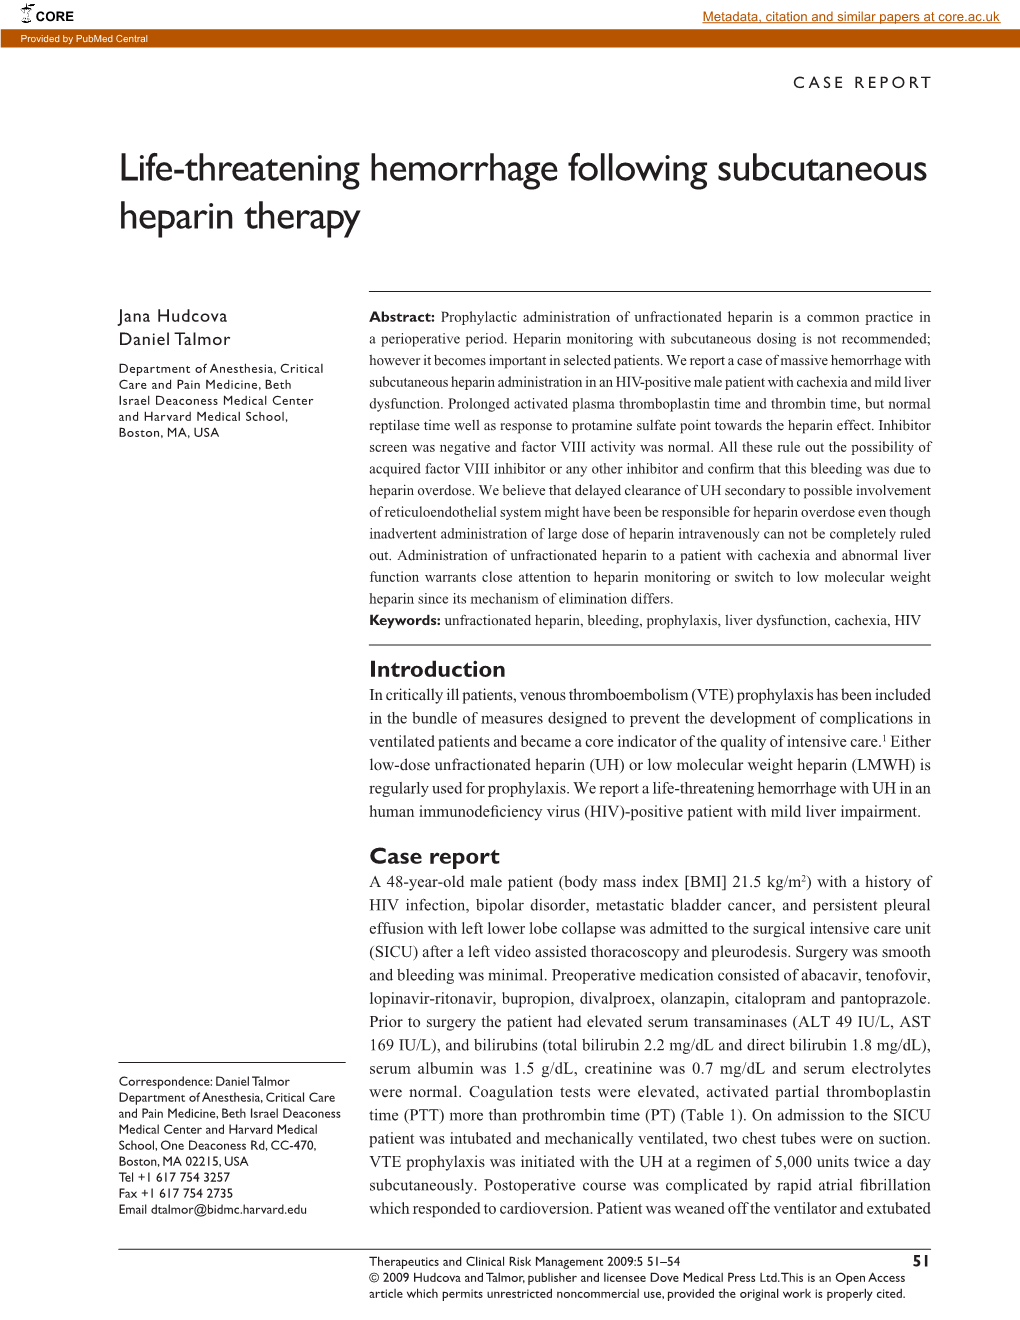 Life-Threatening Hemorrhage Following Subcutaneous Heparin Therapy